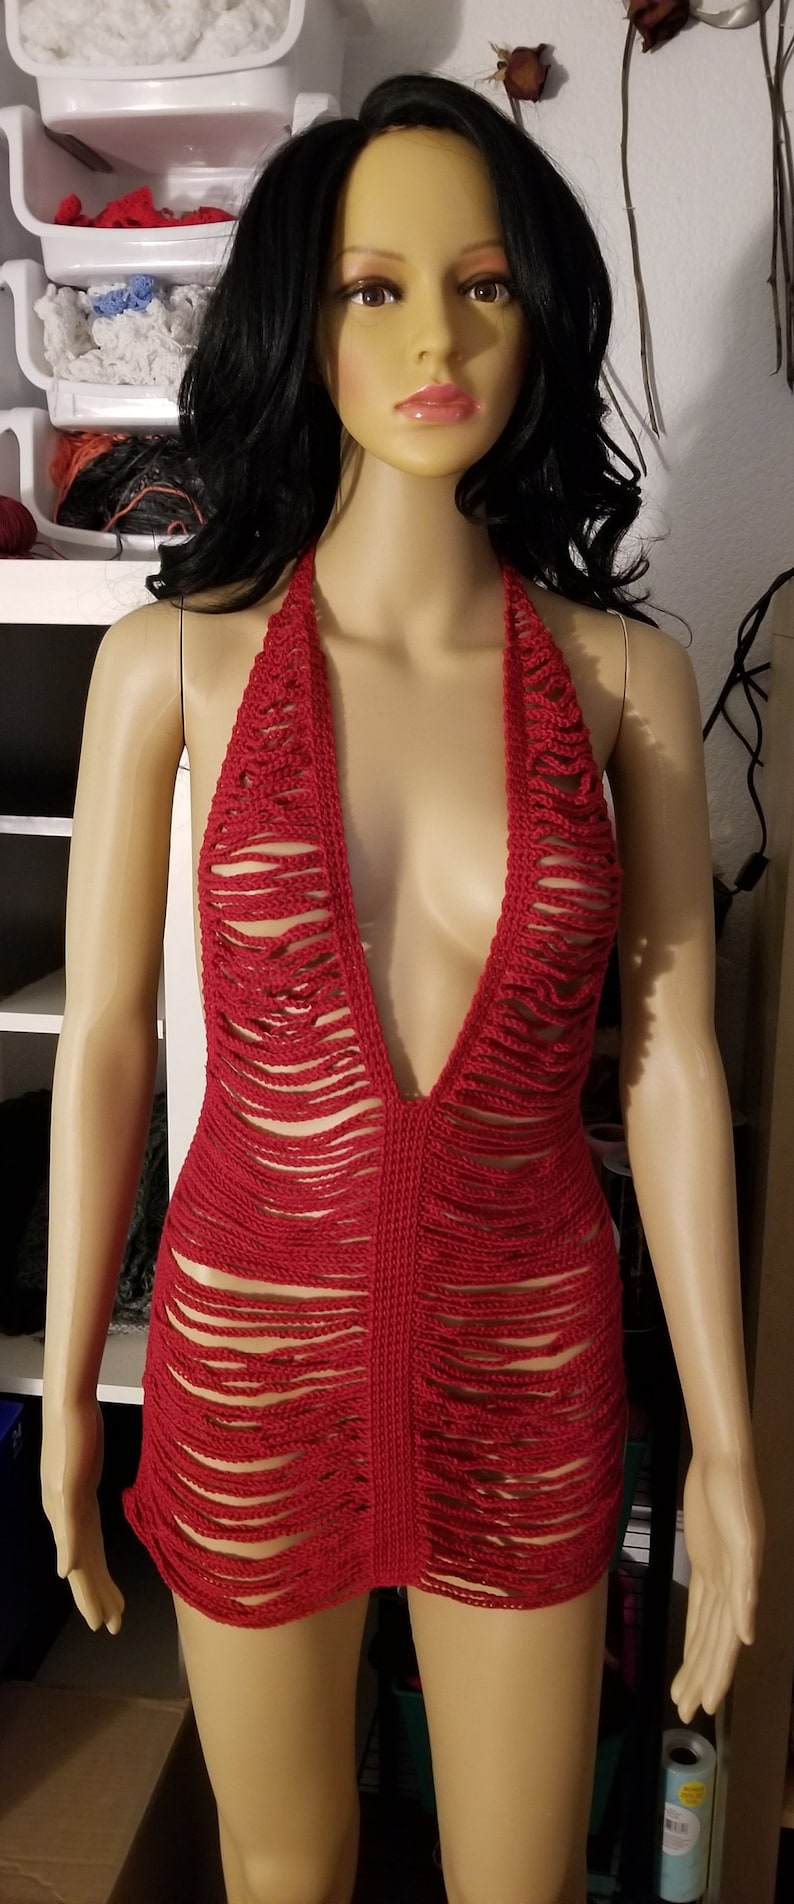 crochet pattern Slinky red dress PATTERN not a physical image 1